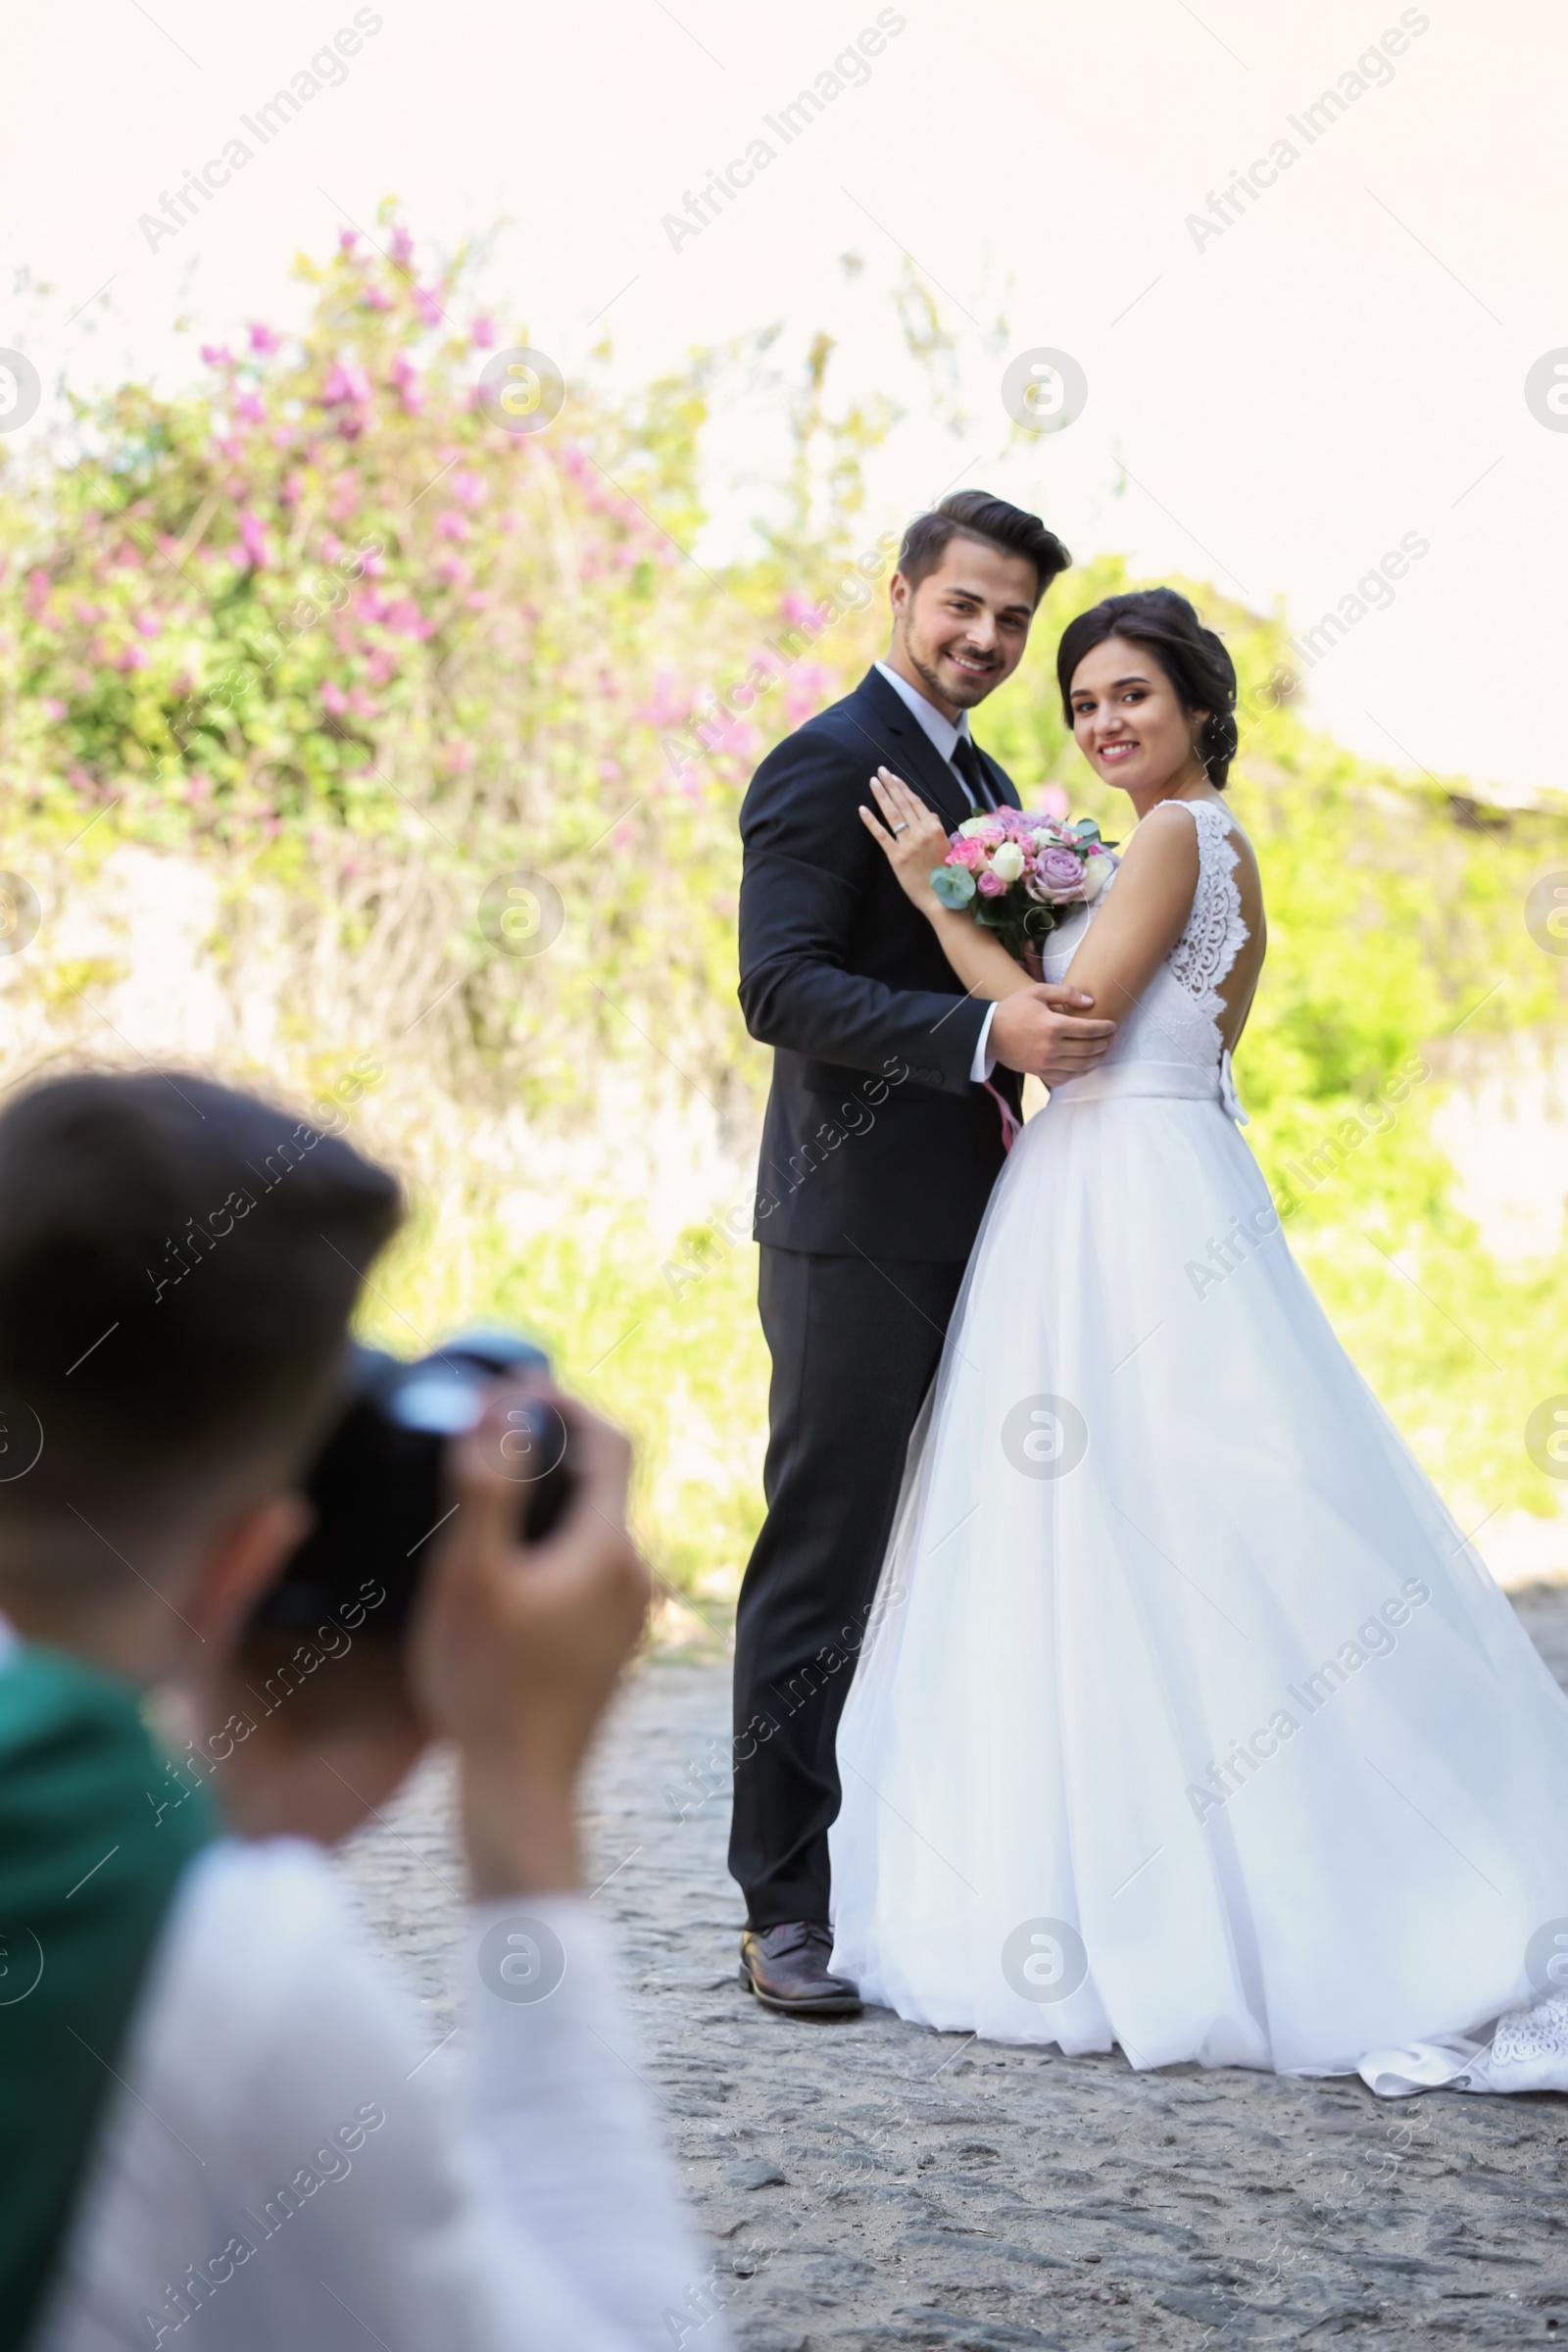 Photo of Professional photographer taking photo of wedding couple, outdoors